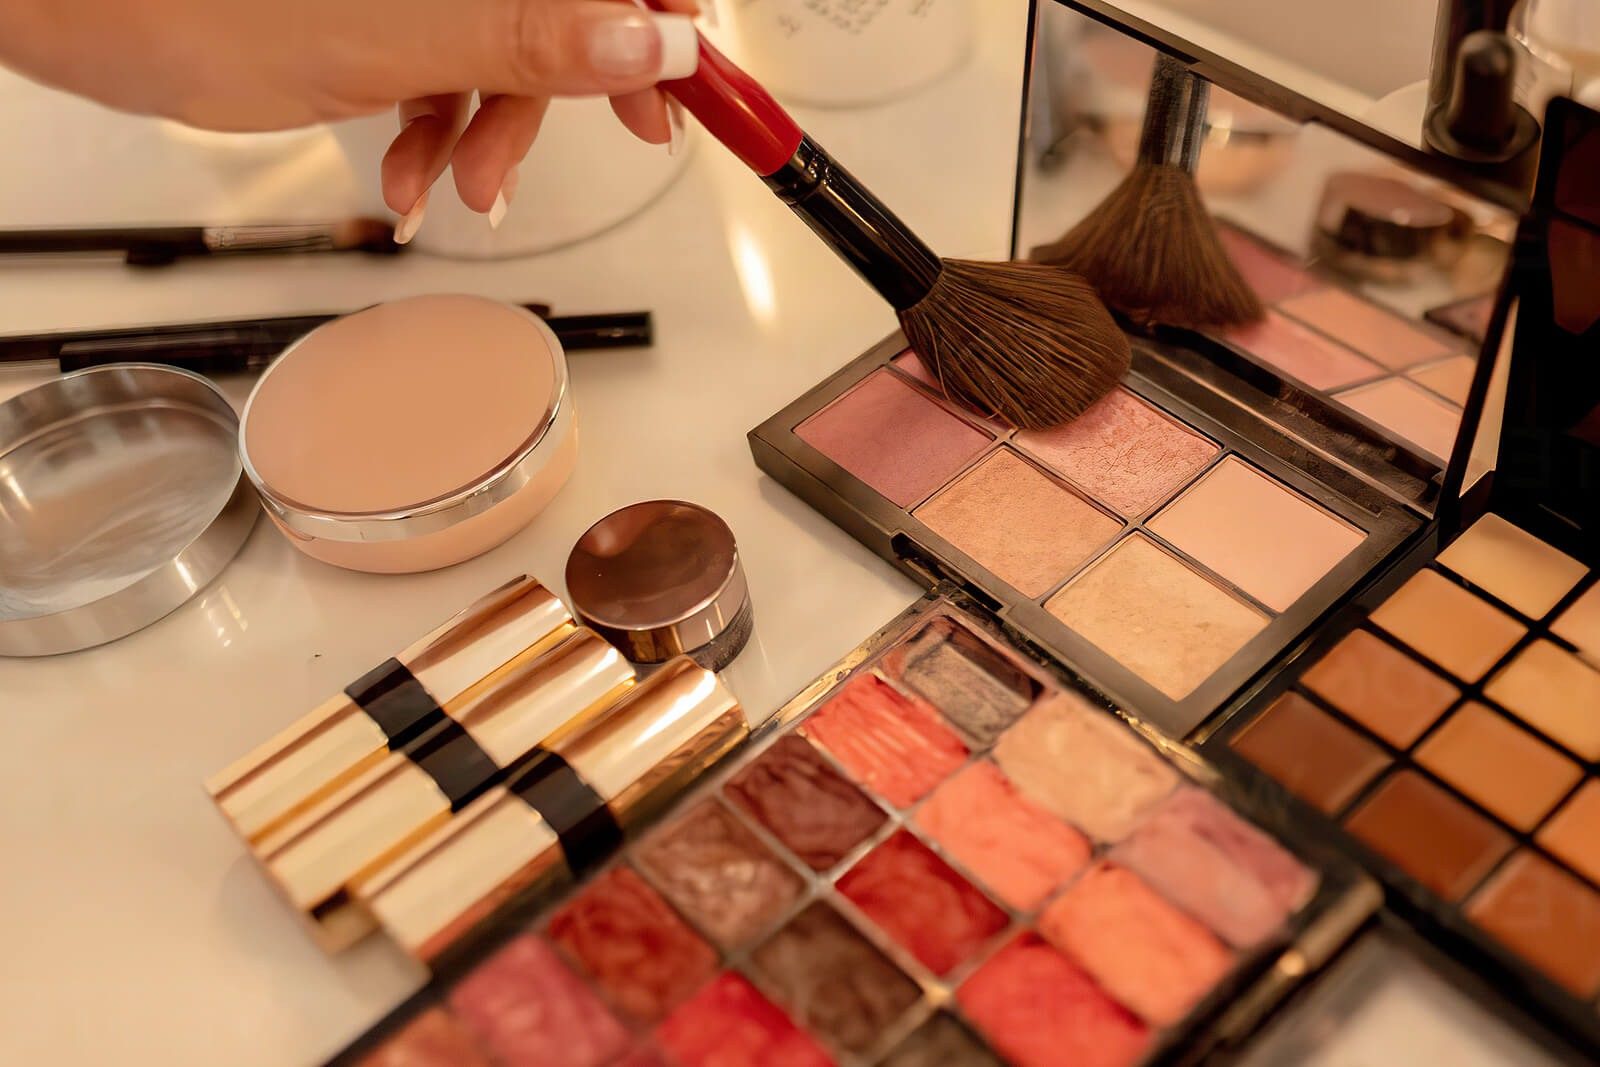 Makeup palette during makeup session in makeup studio